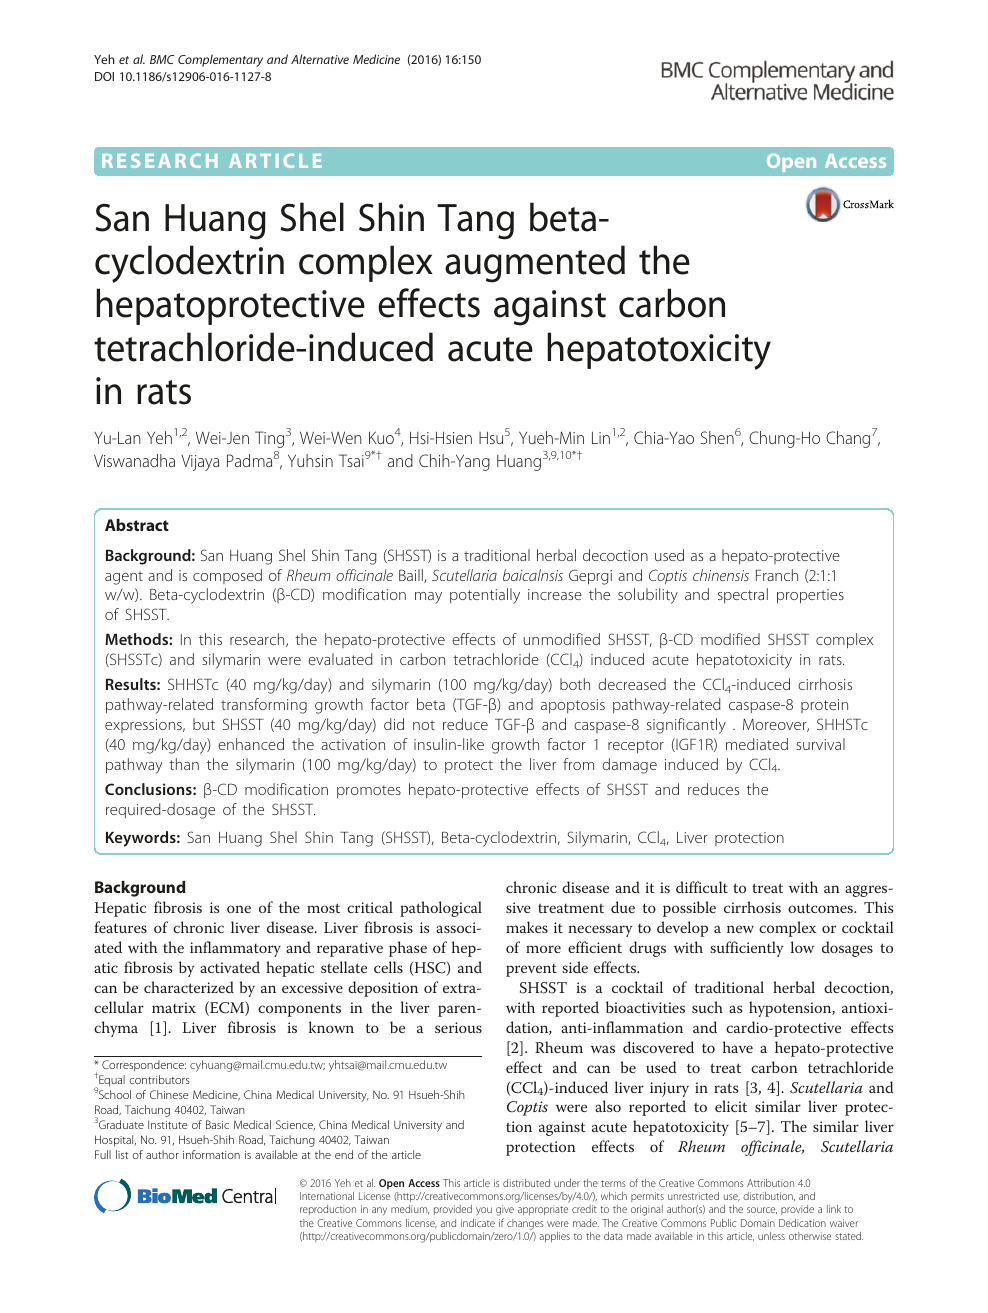 San Huang Shel Shin Tang beta-cyclodextrin complex augmented the